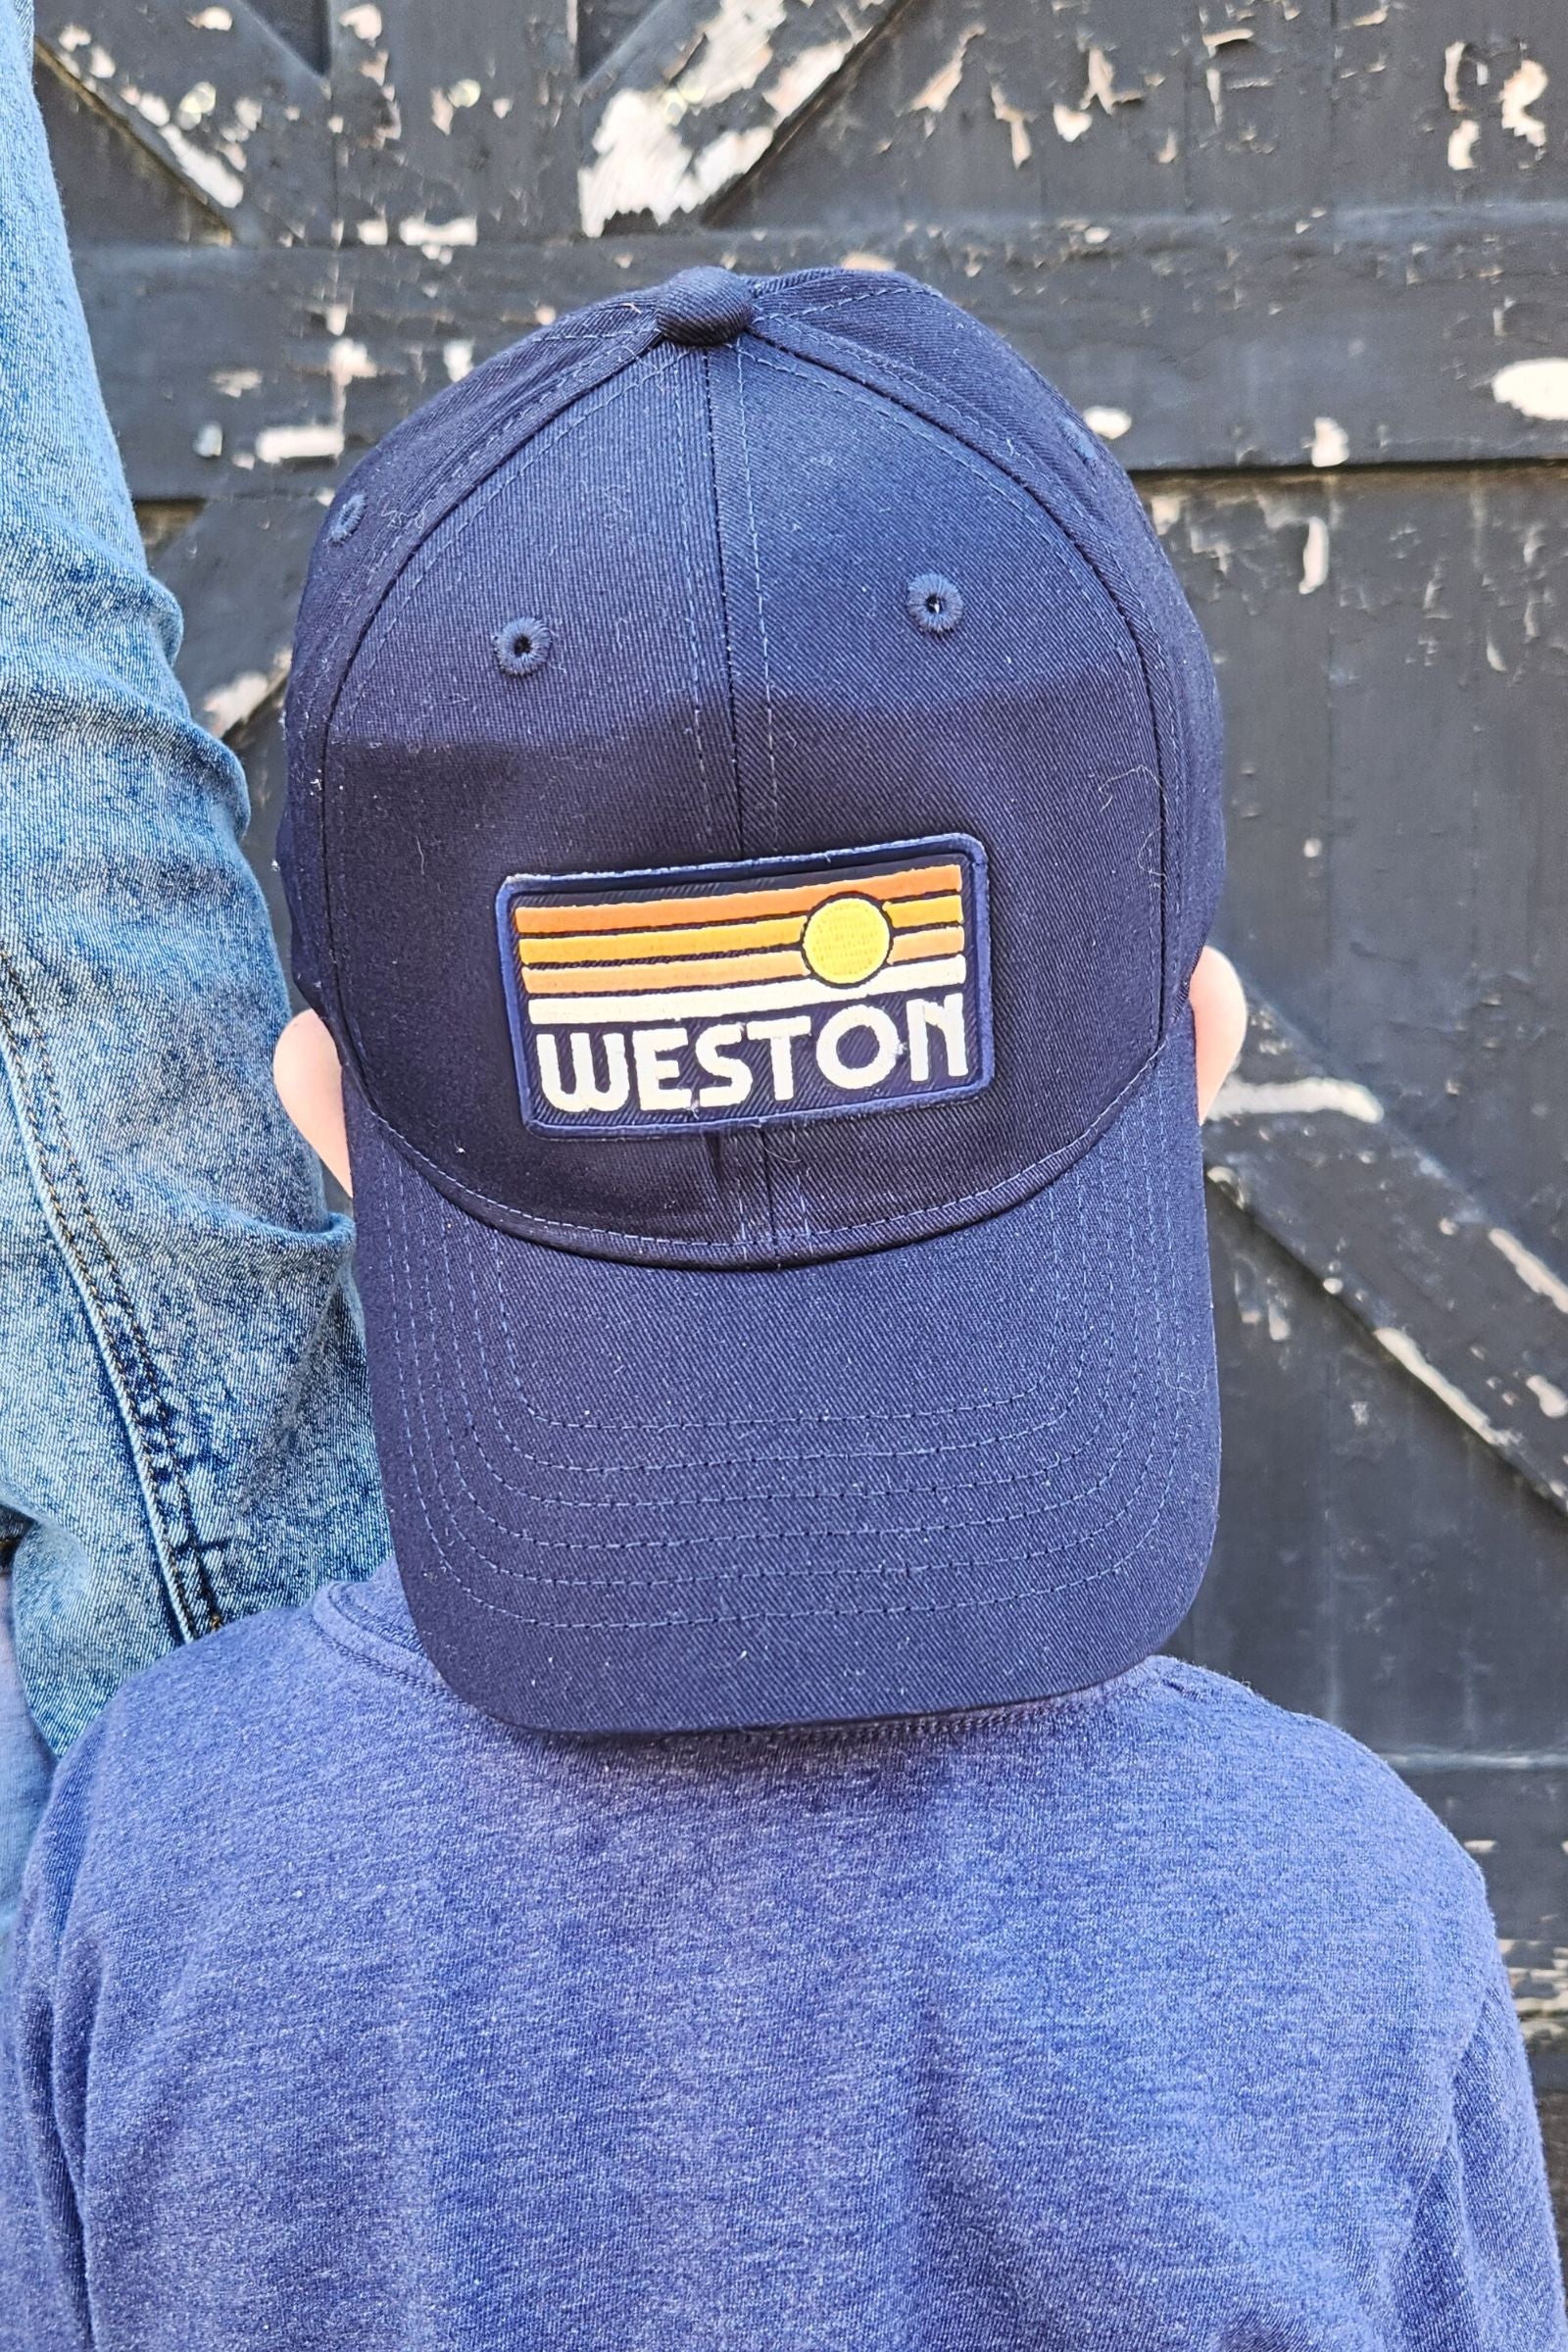 Weston Retro Stripe Sunset YOUTH Hat